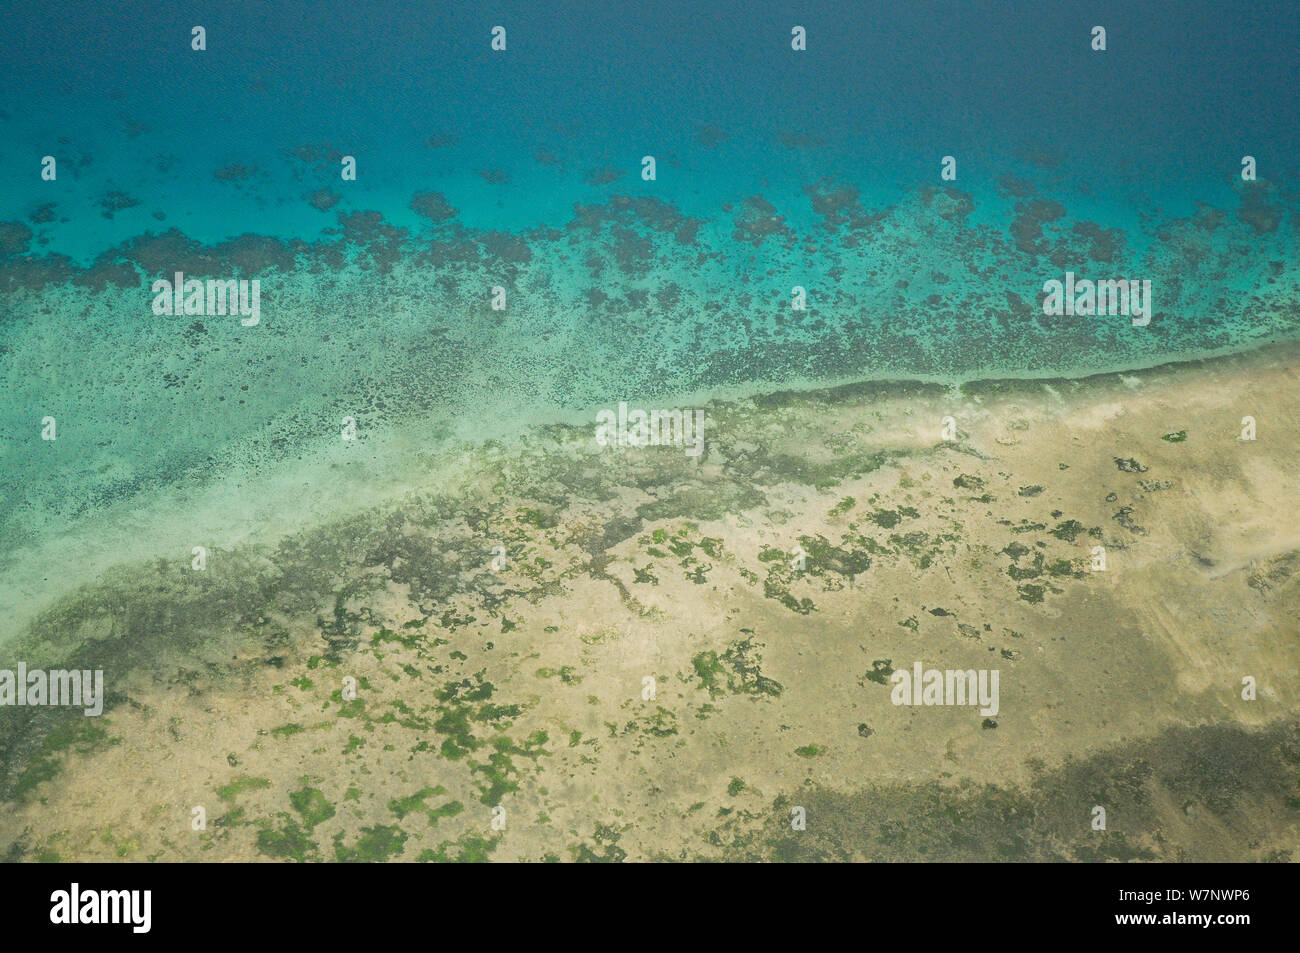 Aerial view of sand atolls and corals off the coast of the Island of Zanzibar, Tanzania Stock Photo